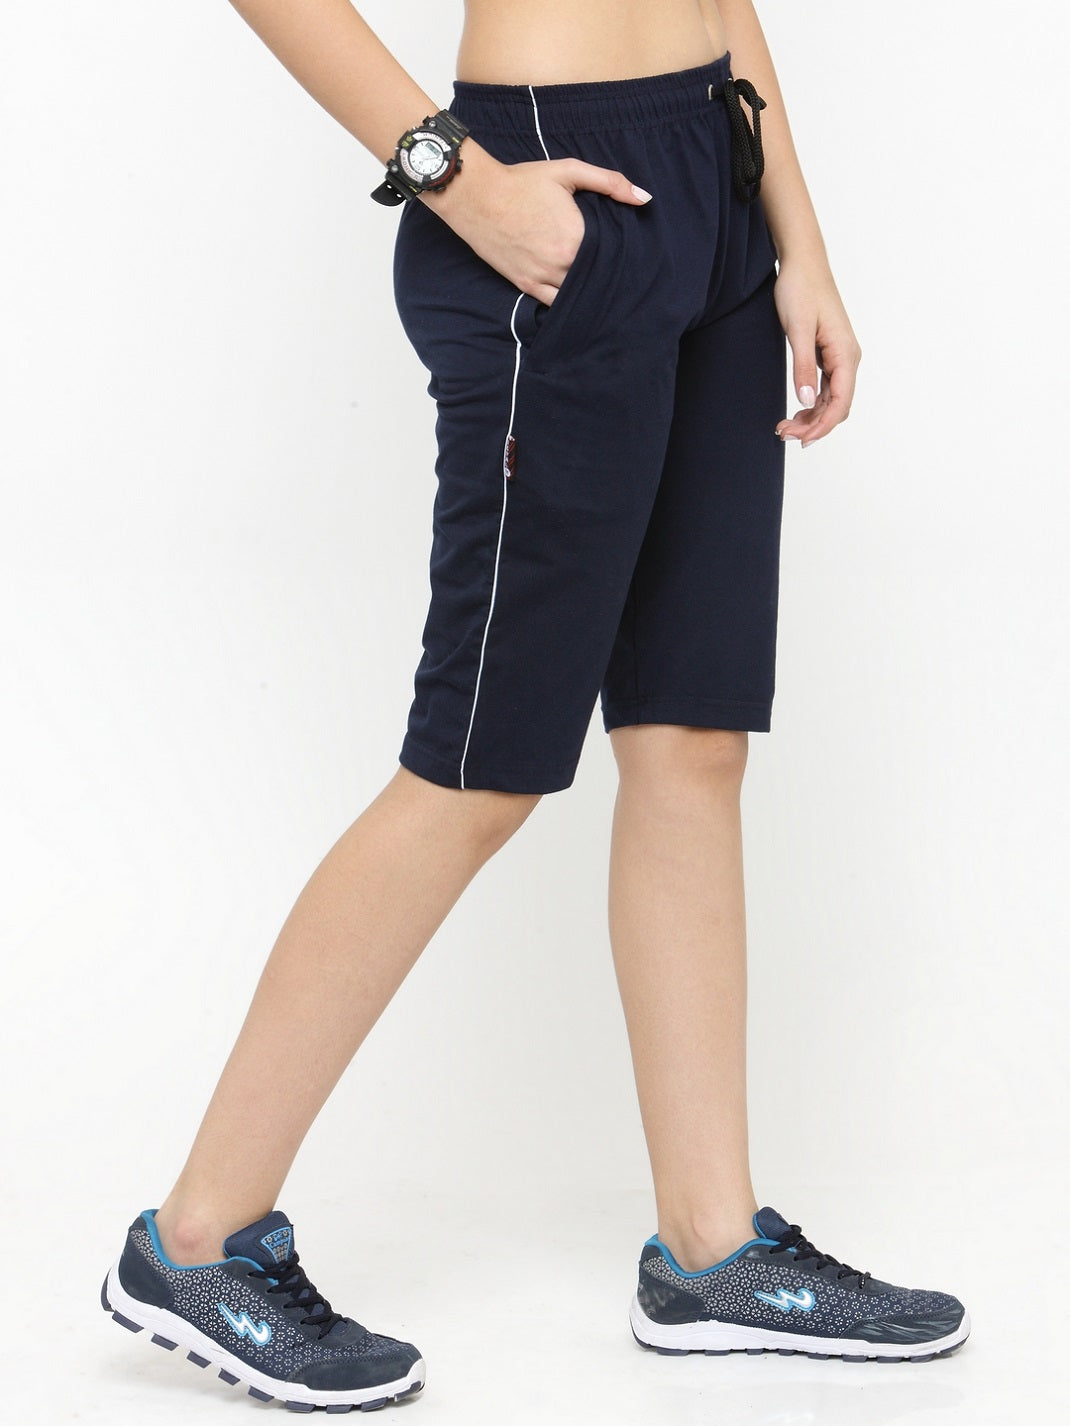 Short Capri Pants Technical Fashion Illustration with Knee Length, Normal  Waist, Slashed Pocket, Extended Waistband Stock Vector - Illustration of  casual, capri: 210160316